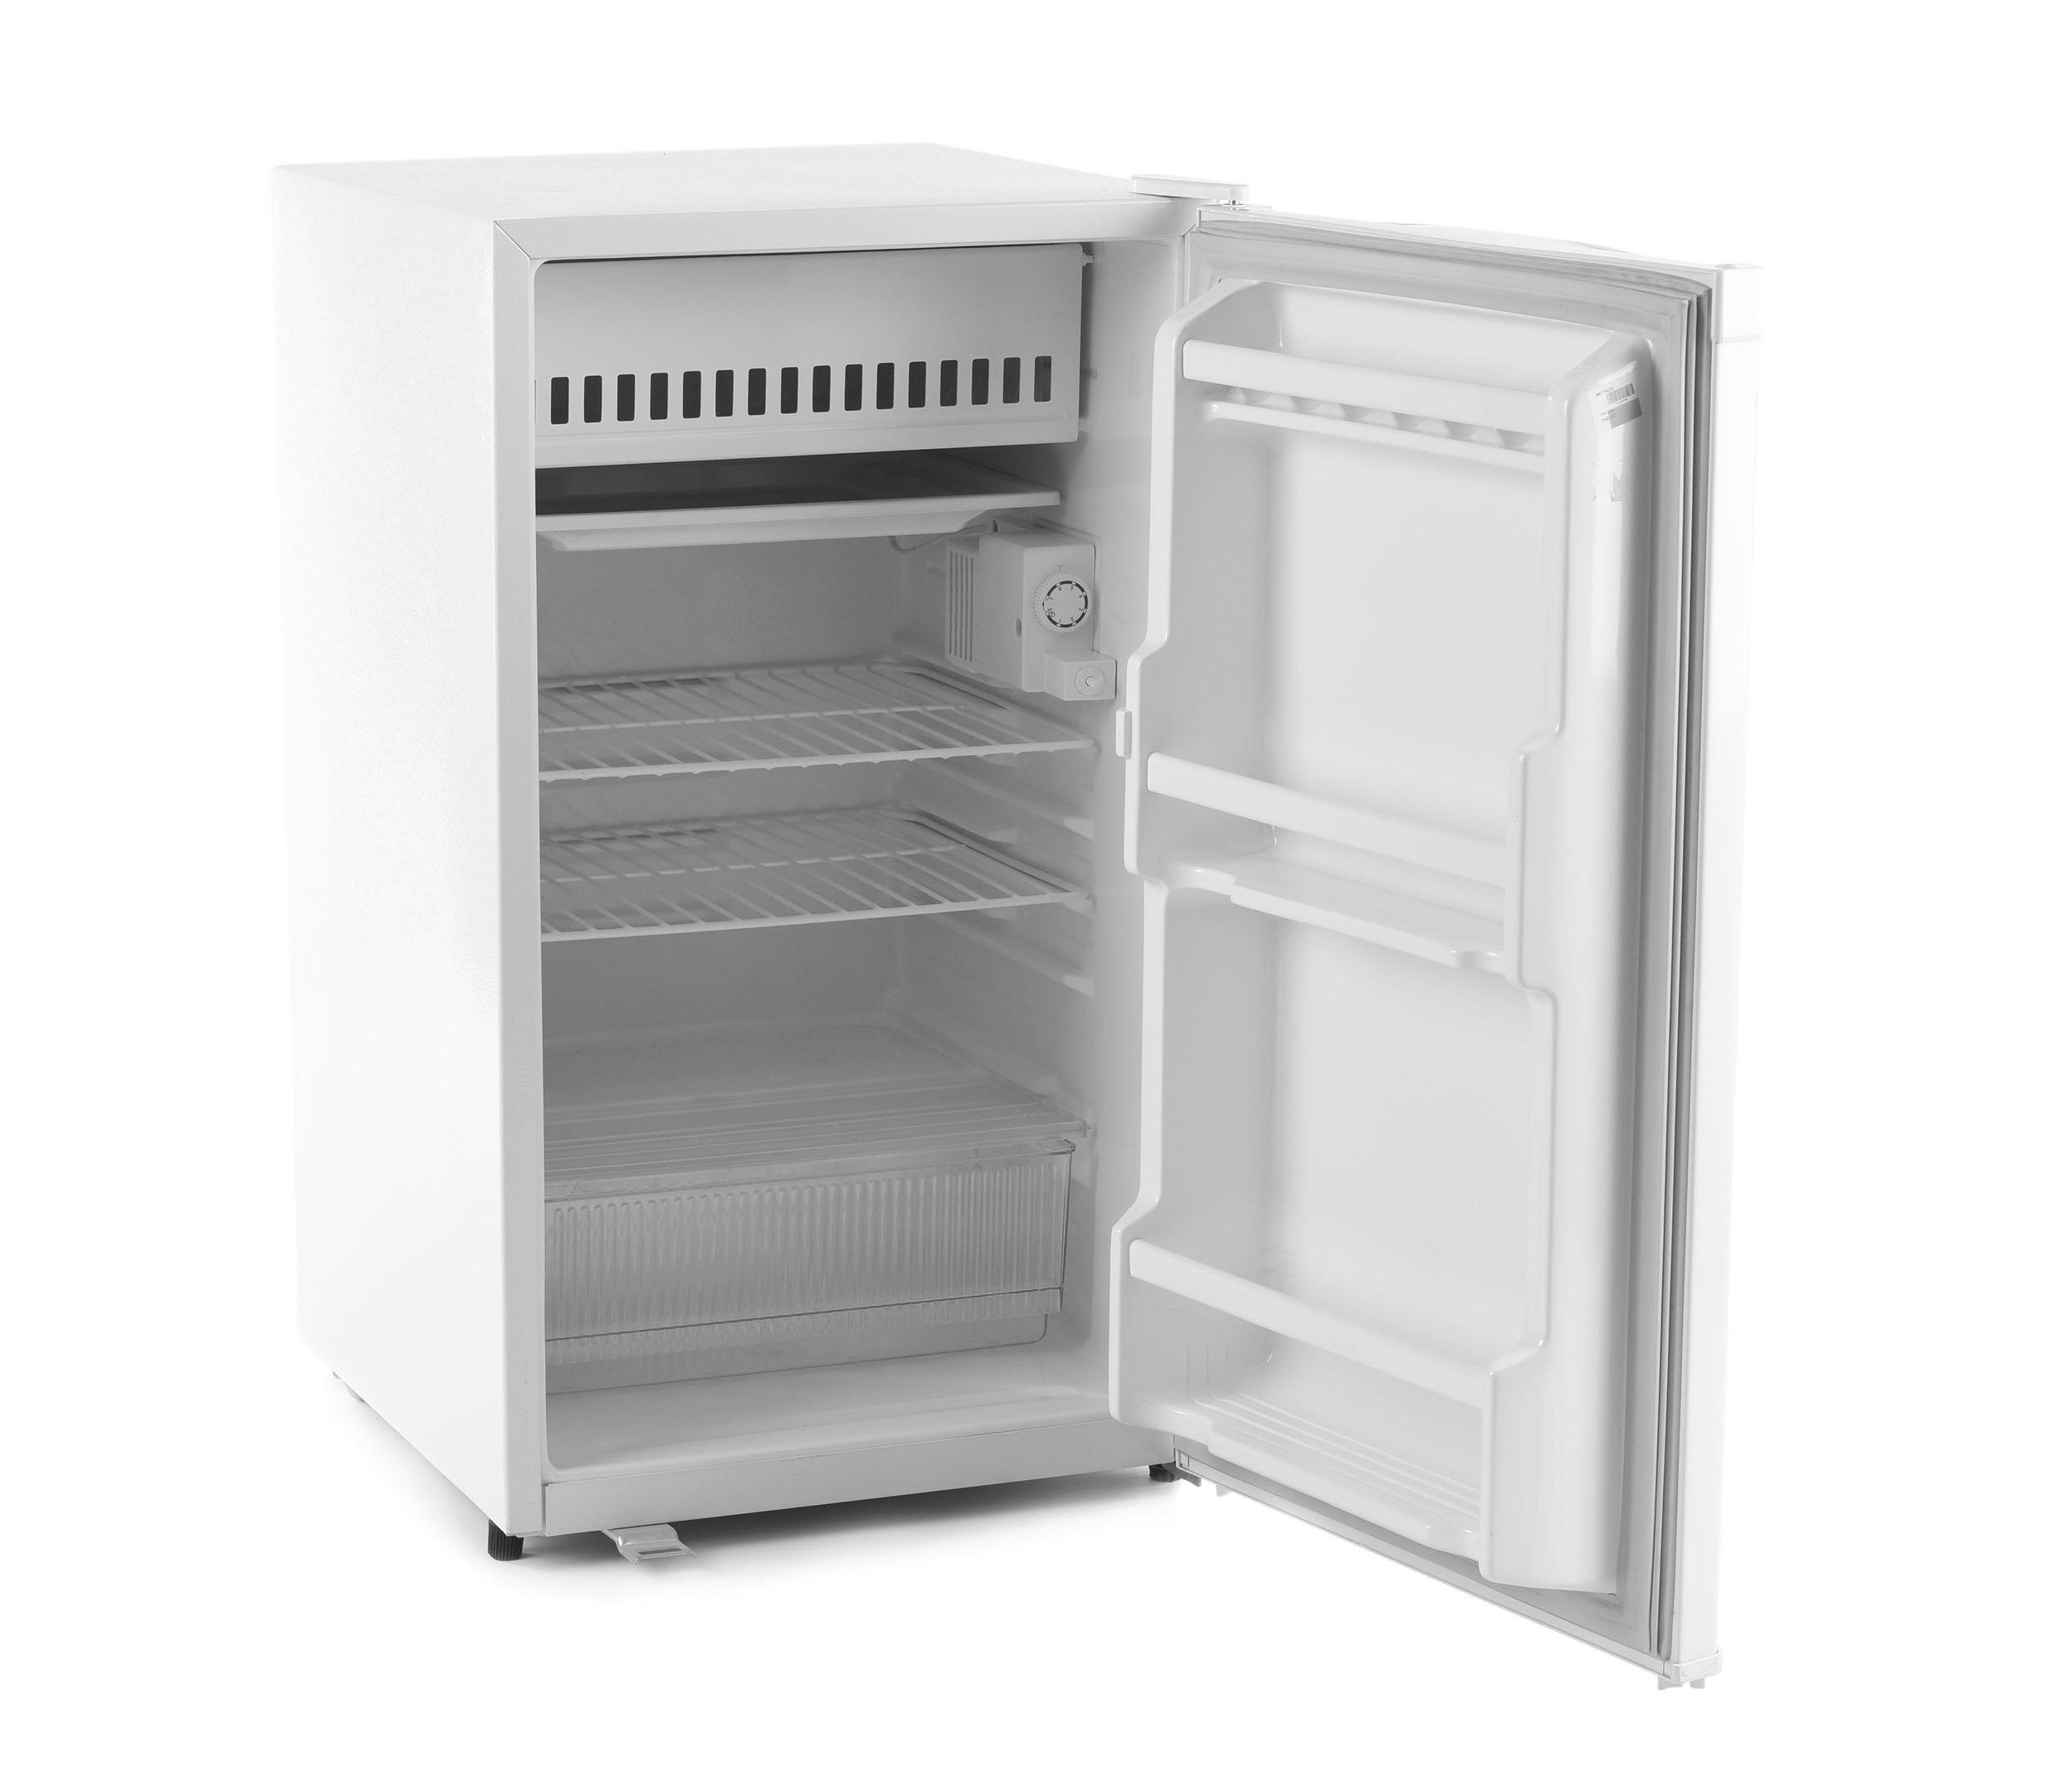 19++ Haier mini fridge settings 0 5 ideas in 2021 